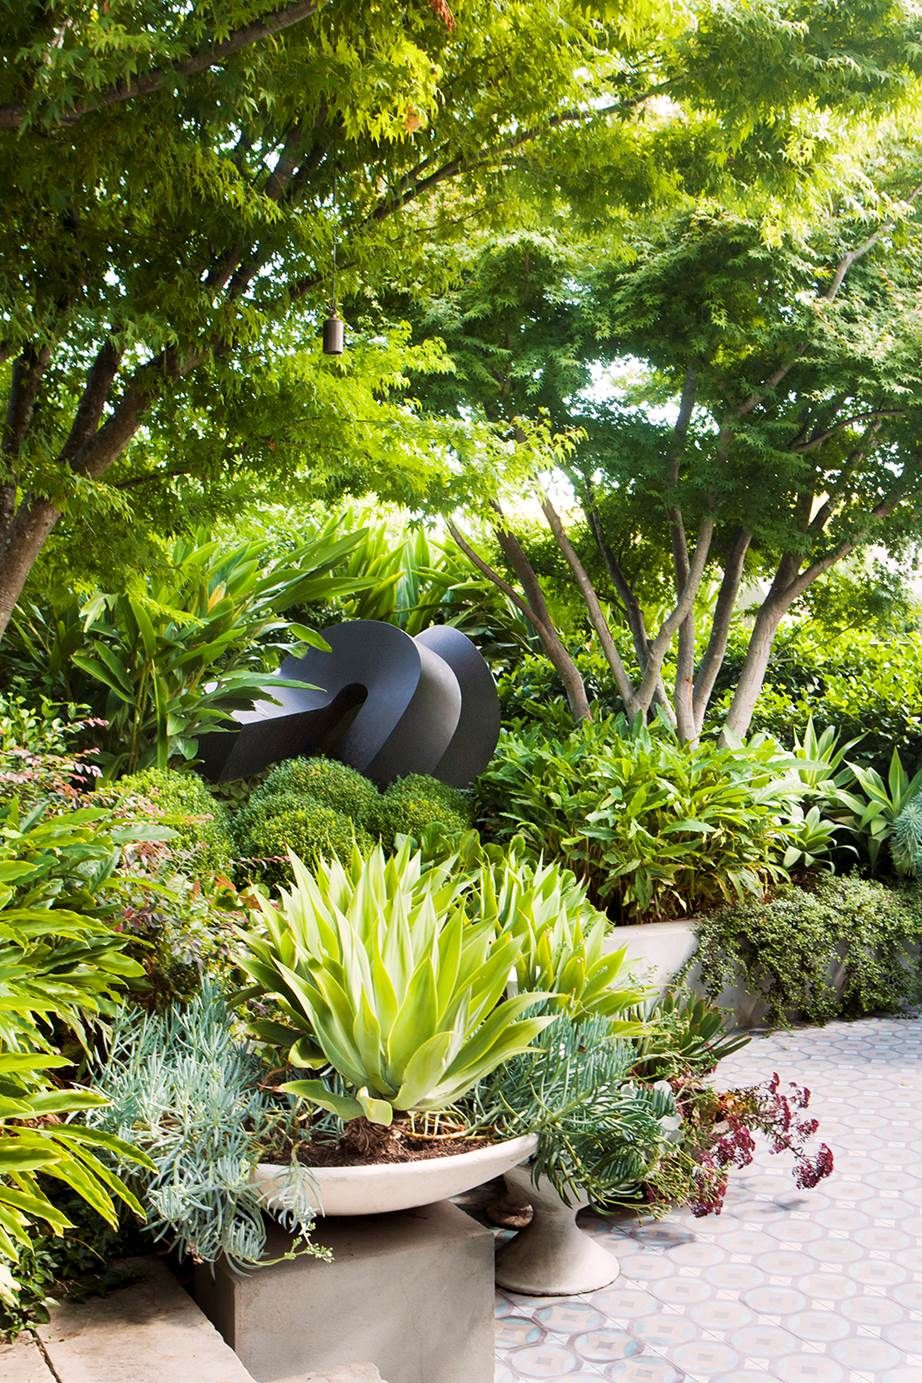 Creating a Stunning Backyard Garden with Beautiful Landscape Design